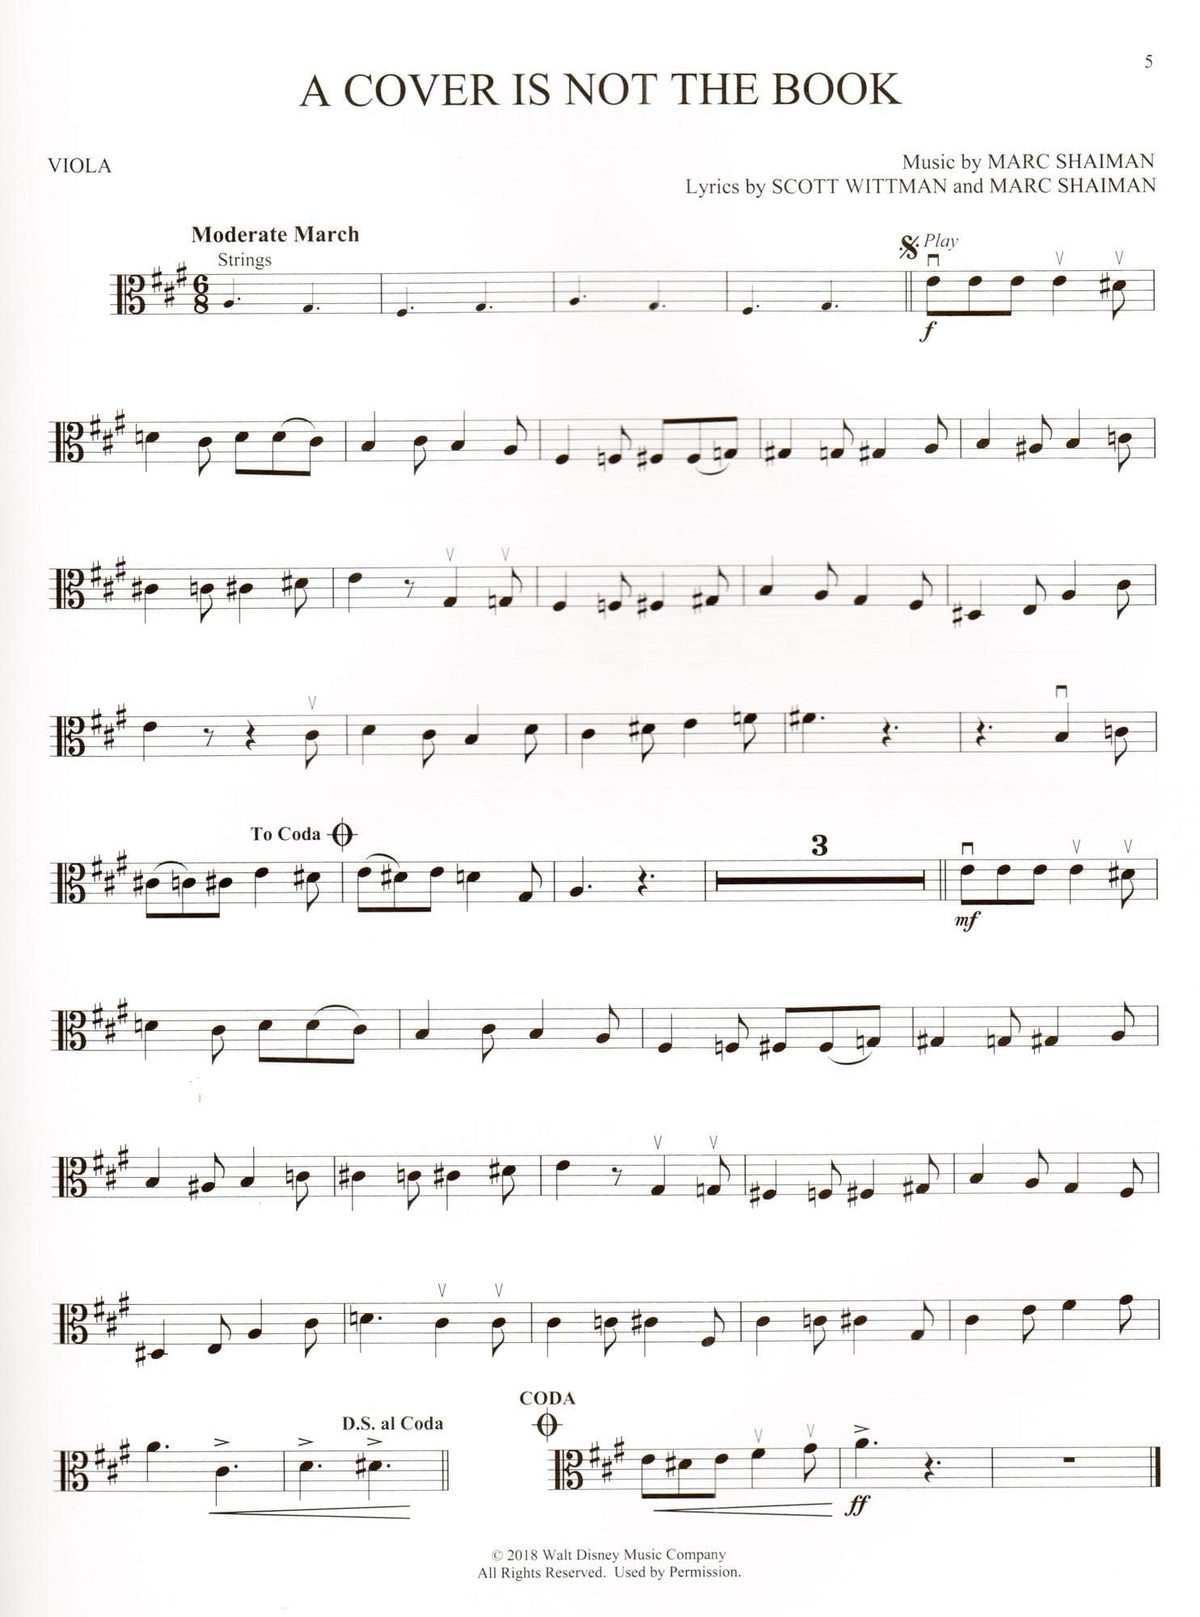 Mary Poppins Returns - for Viola with Audio Accompaniment - Hal Leonard Instrumental Play-Along